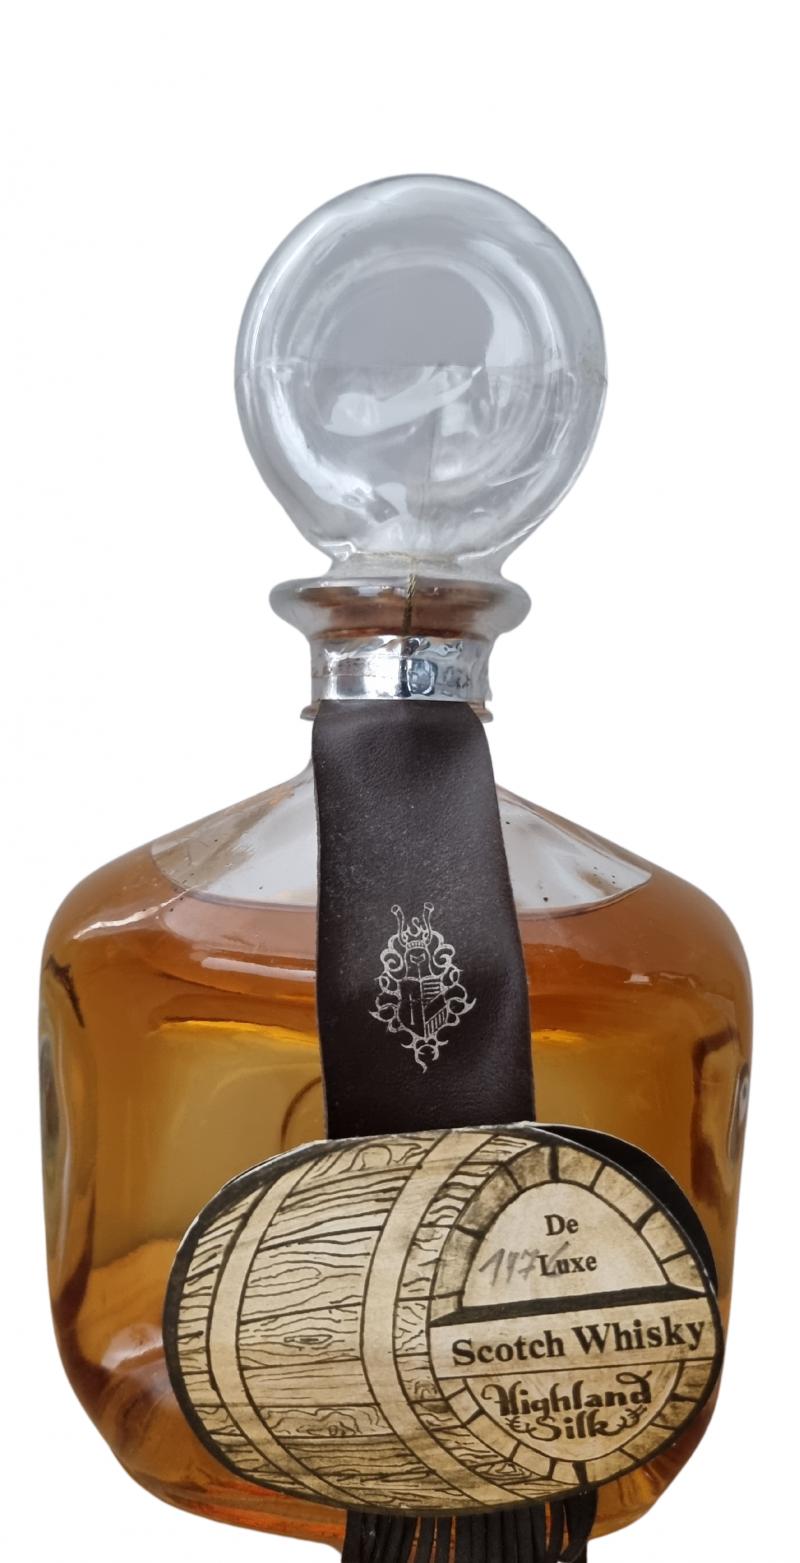 Highland Silk De Luxe Scotch Whisky